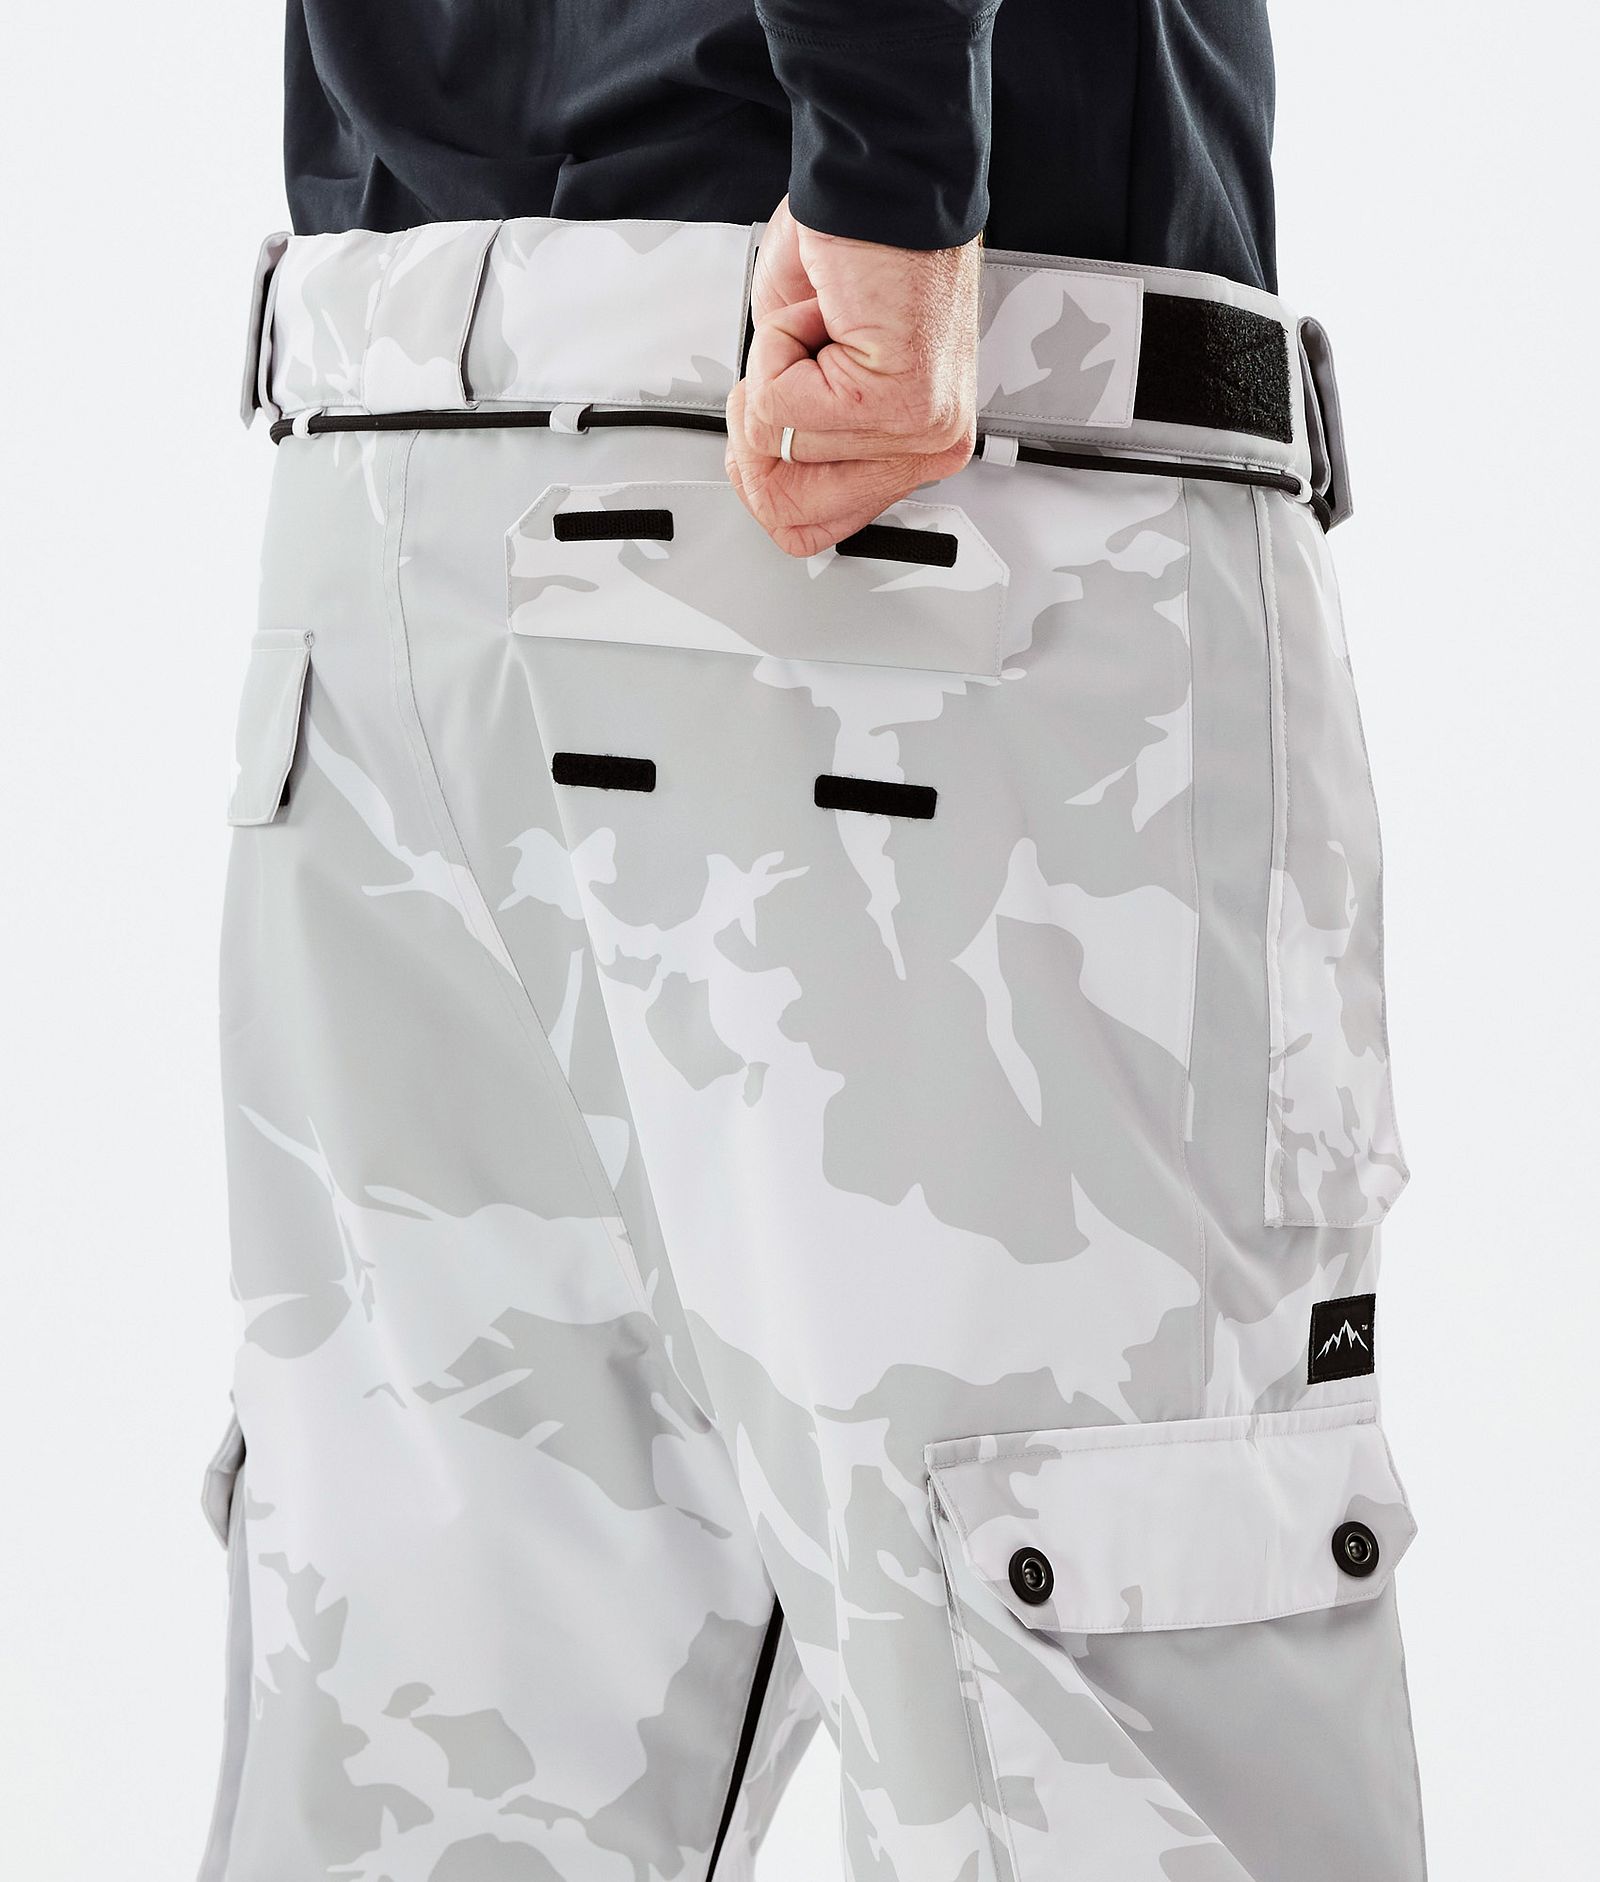 Iconic Pantaloni Sci Uomo Grey Camo